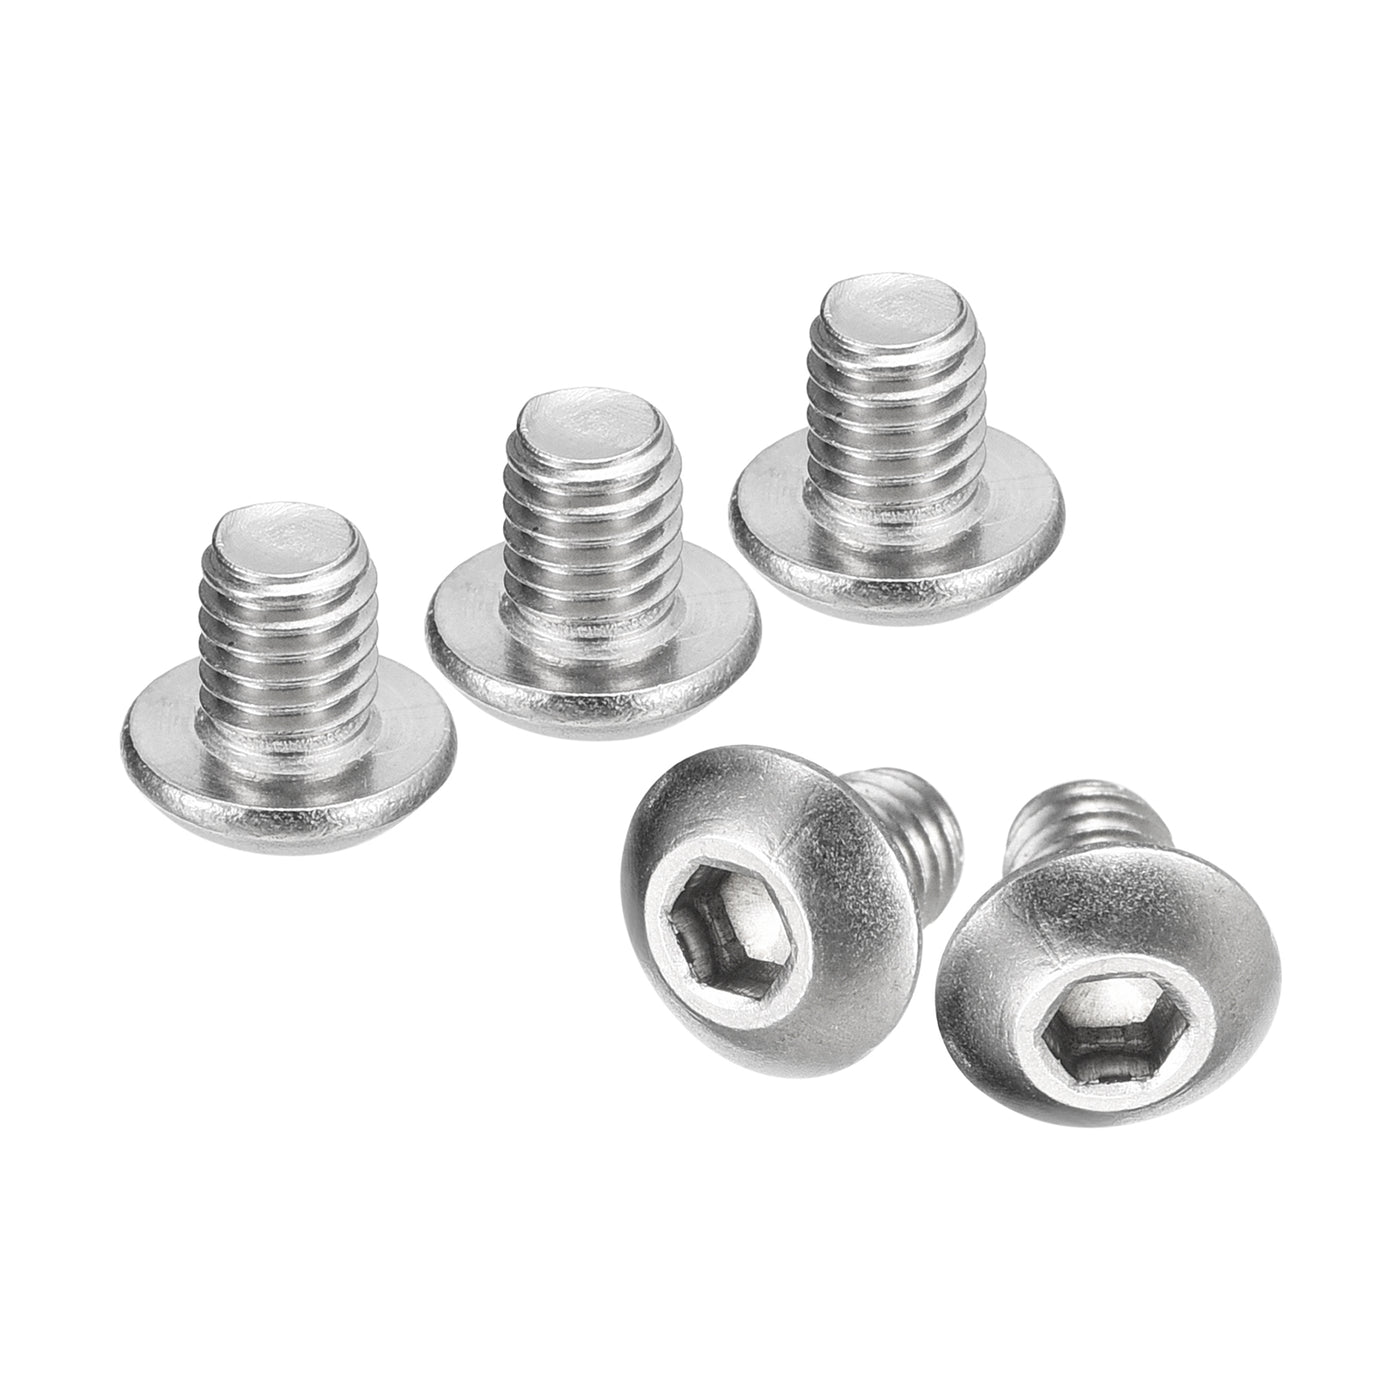 uxcell Uxcell #10-32x1/4" Button Head Socket Cap Screws, 10pcs 304 Stainless Steel Screws